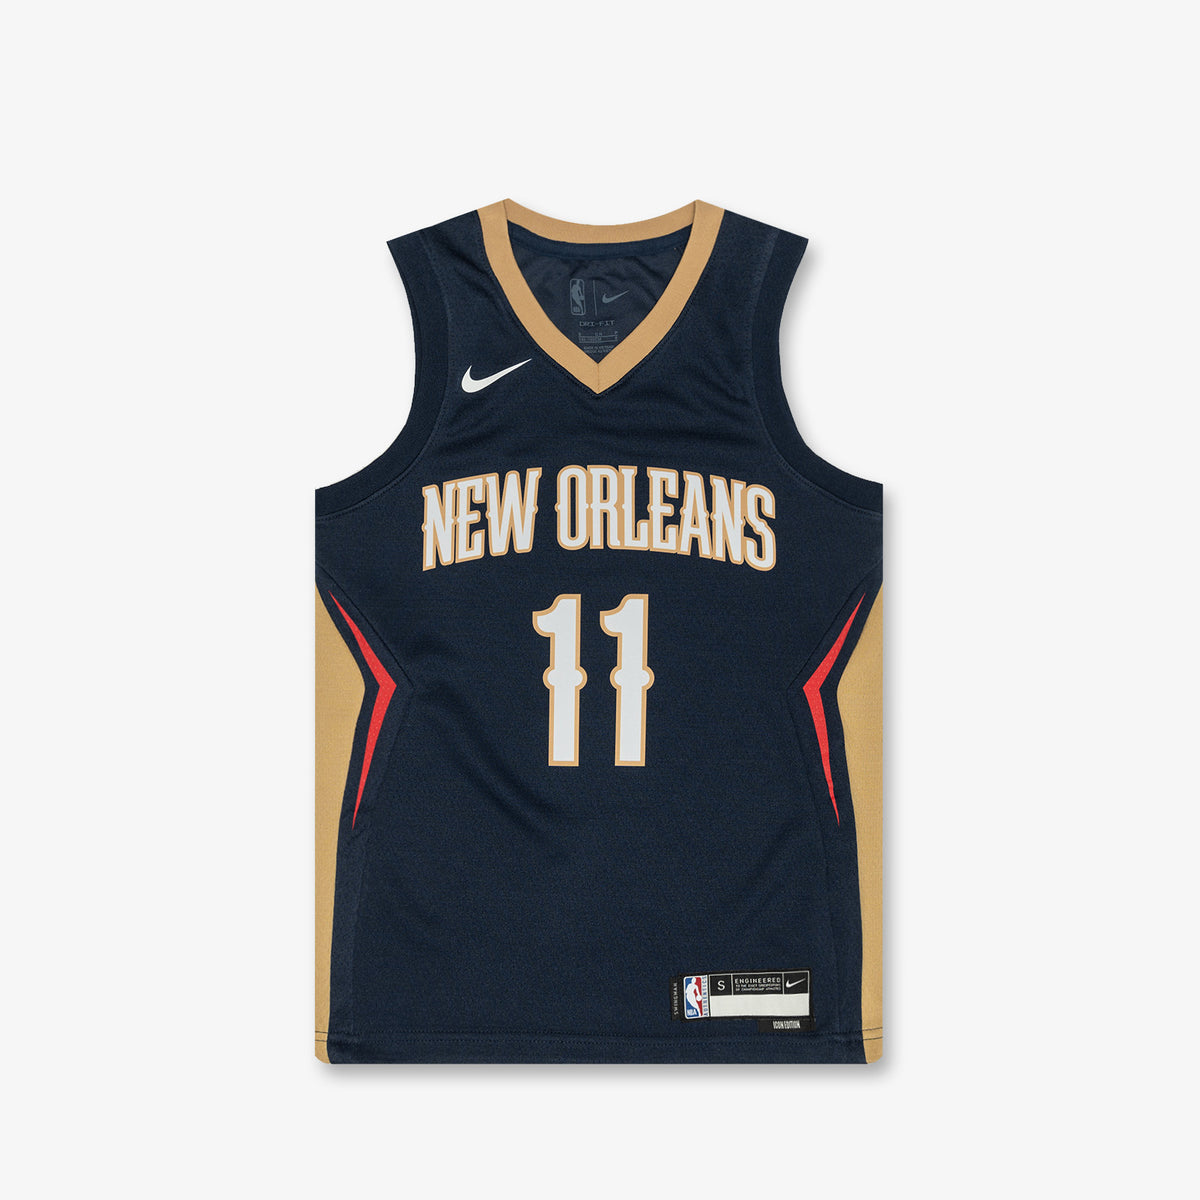 New Orleans Pelicans Gear, Pelicans Jerseys, Store, Pelicans Gifts